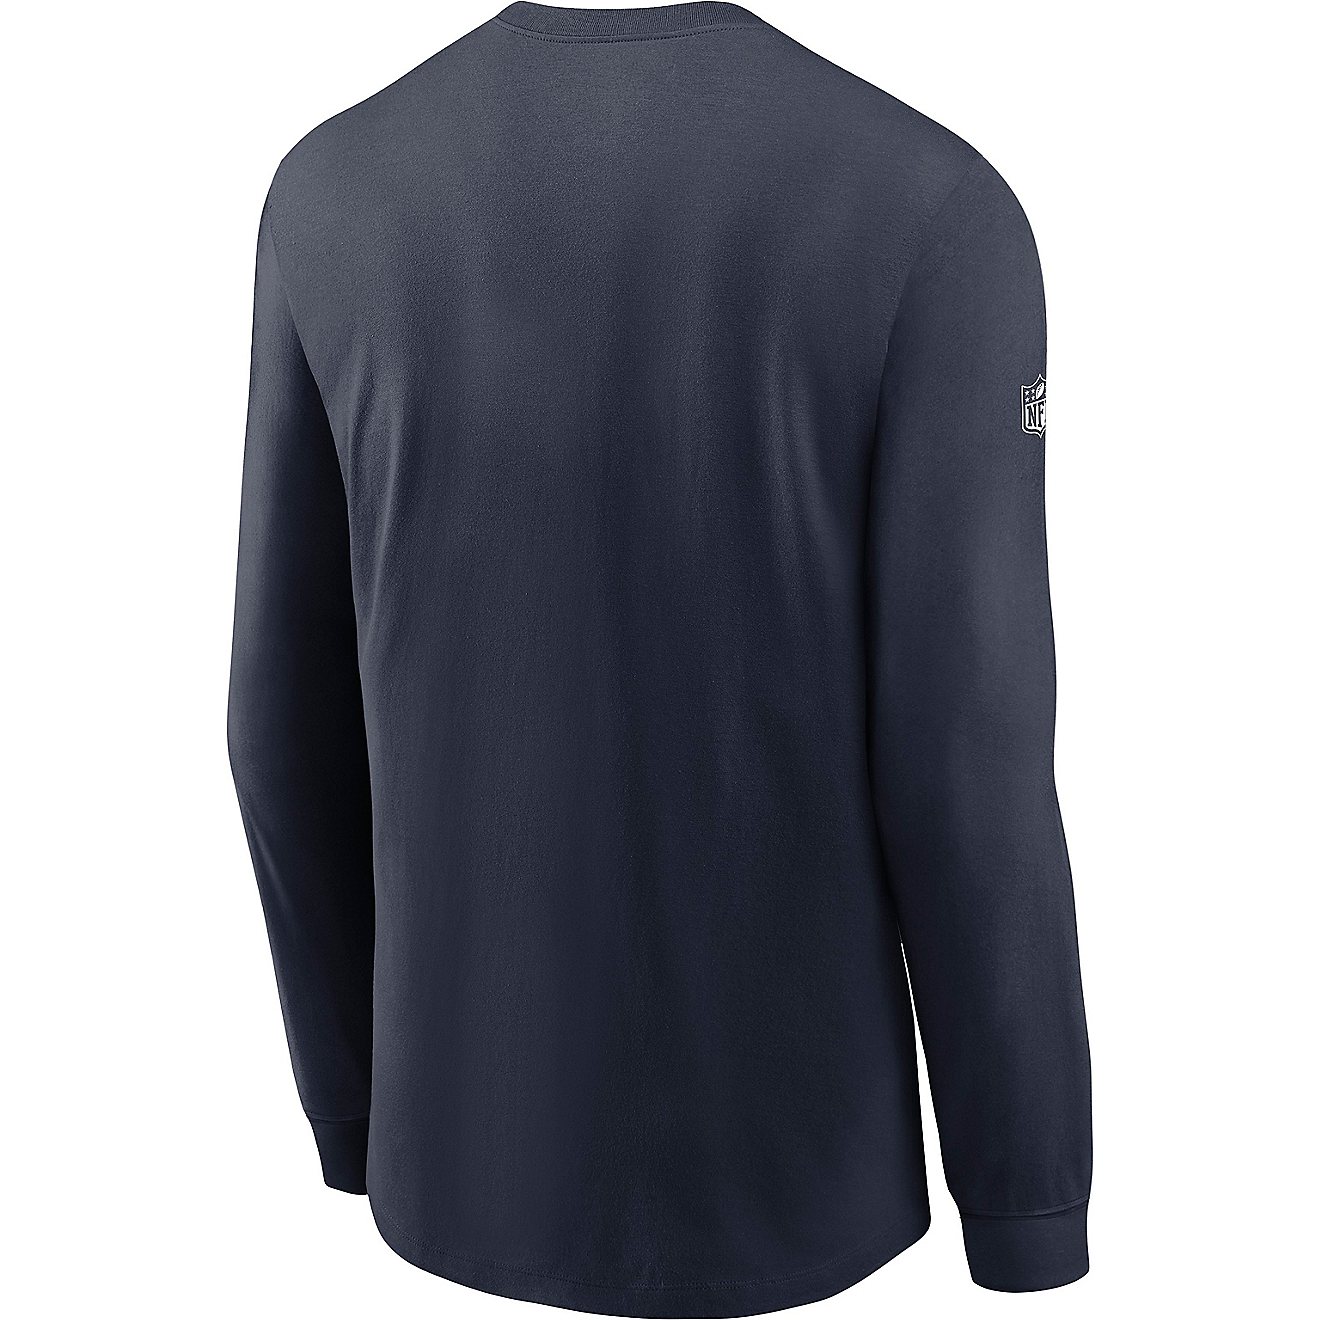 Nike Men's Houston Texans Team Issue Dri-FIT Long Sleeve T-shirt | Academy